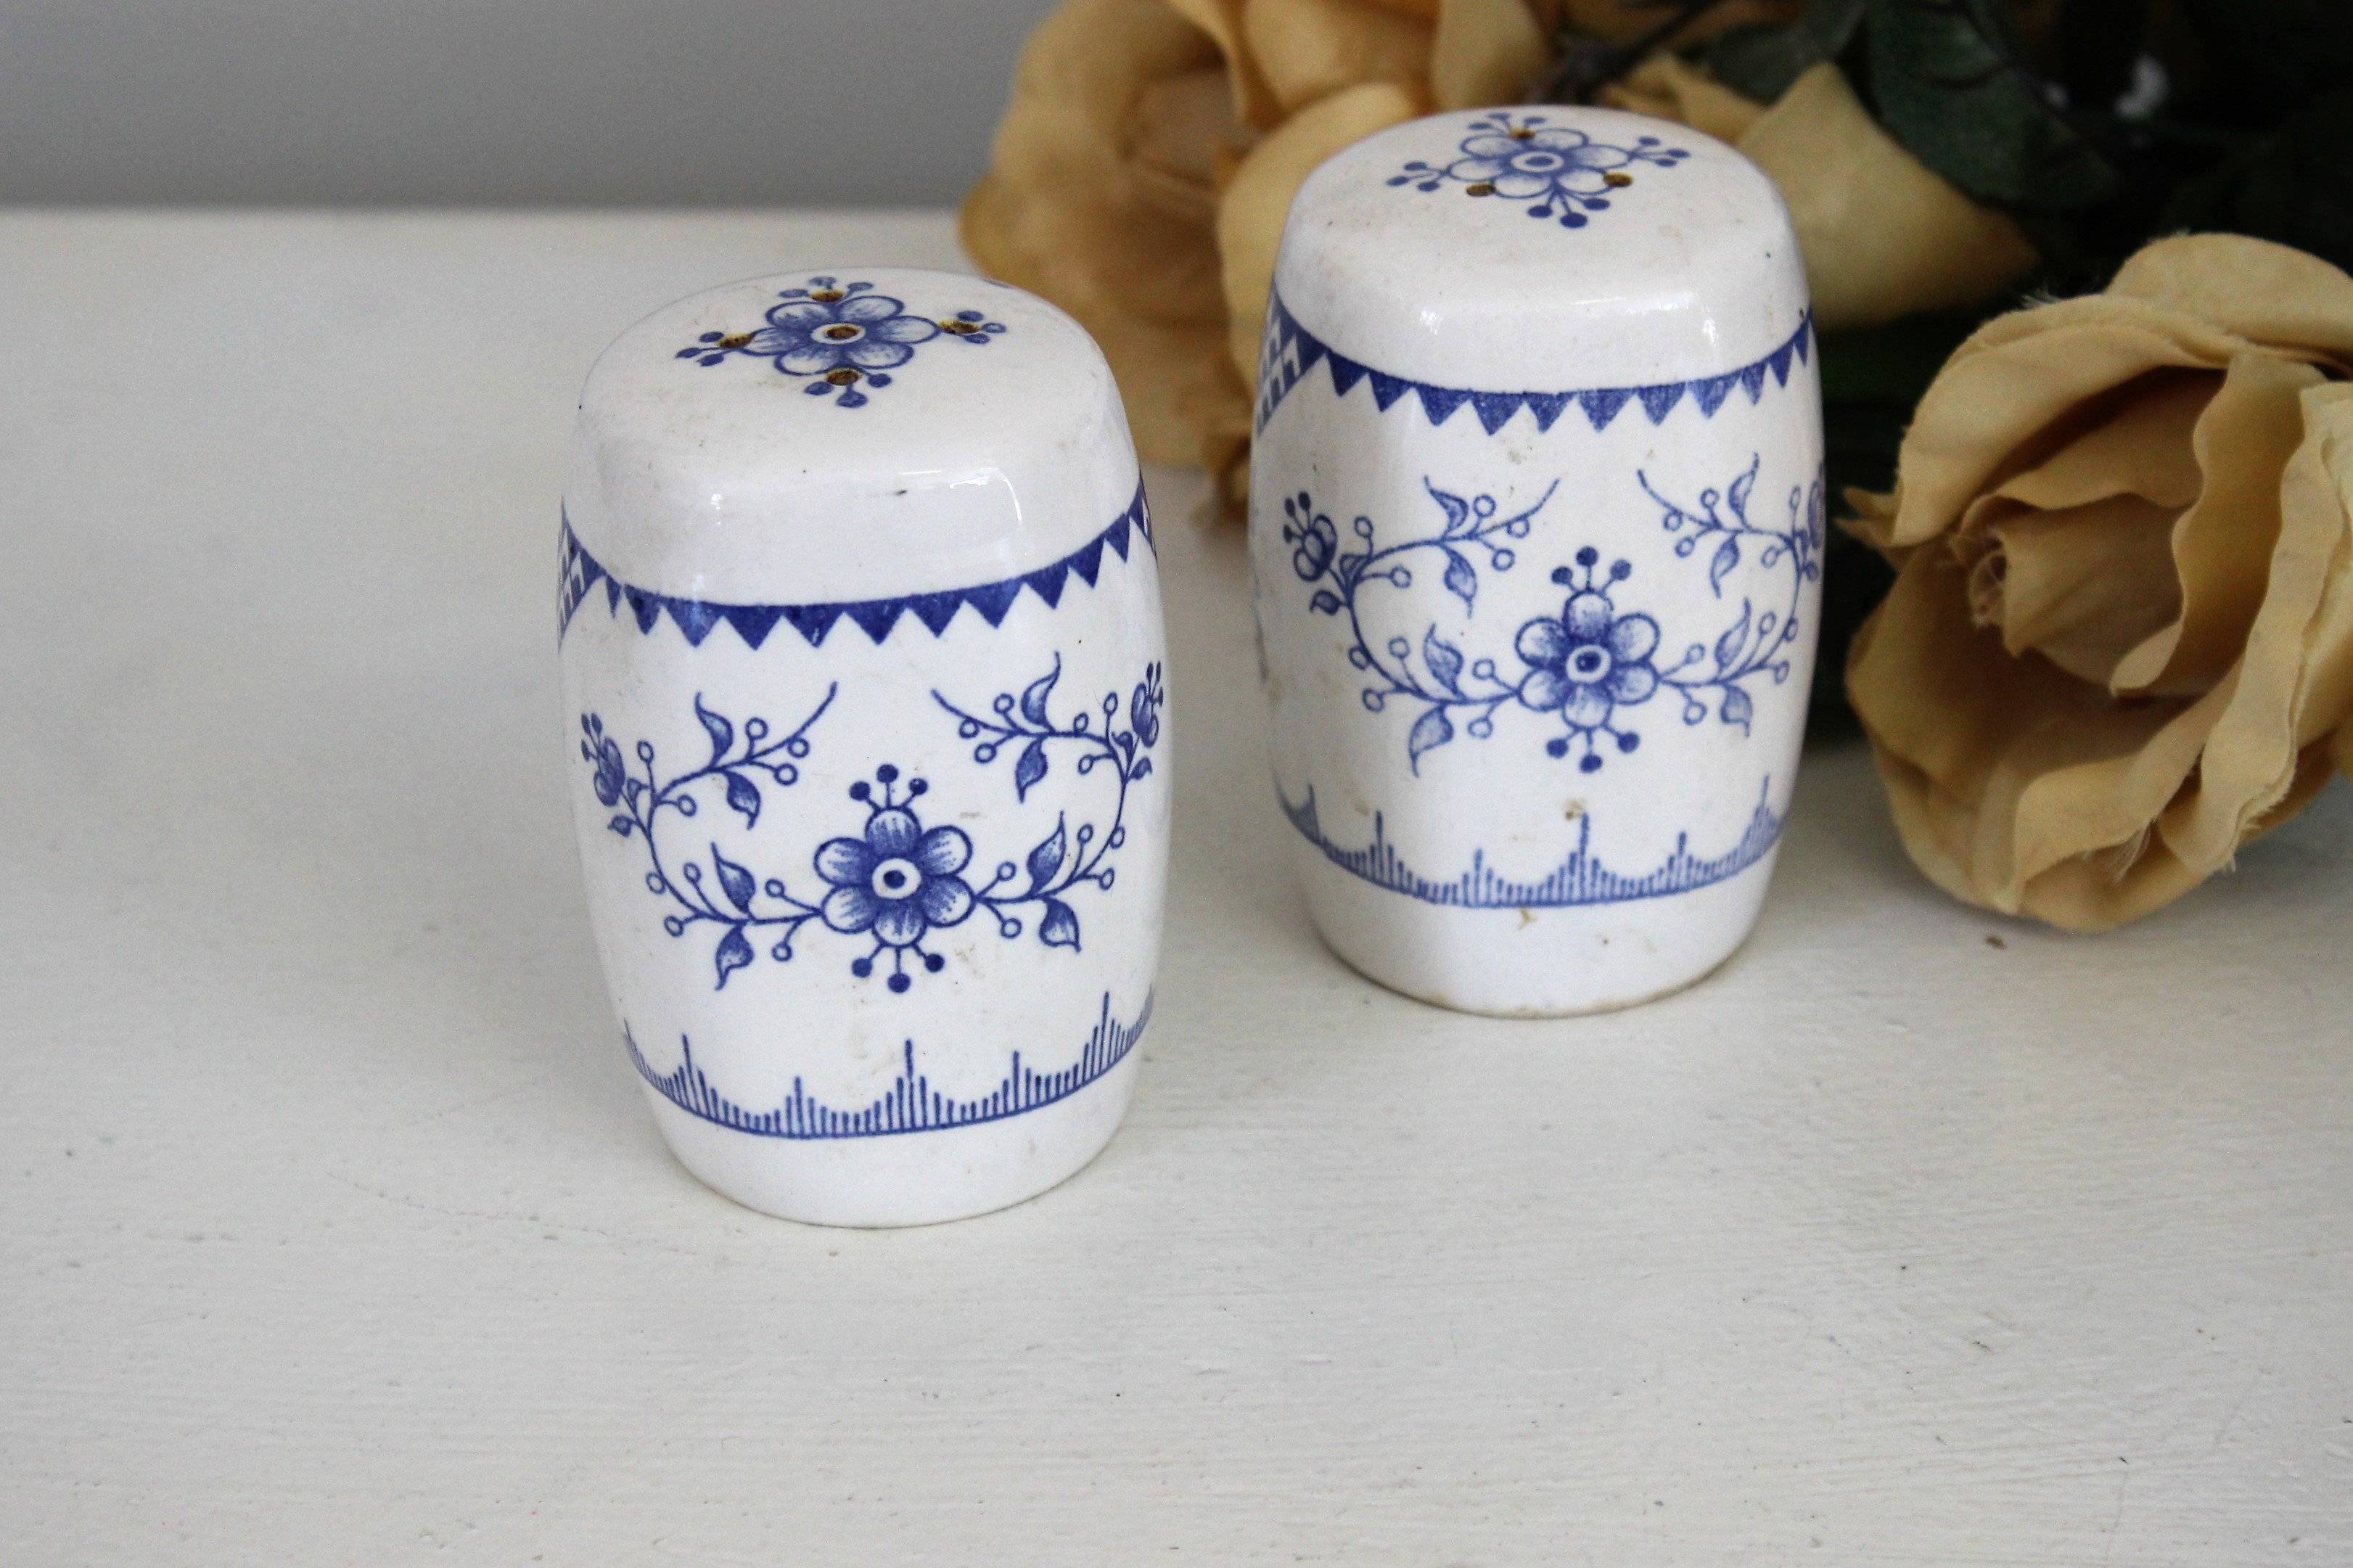 White and Turquoise Buddha Ceramic Salt & Pepper Shakers